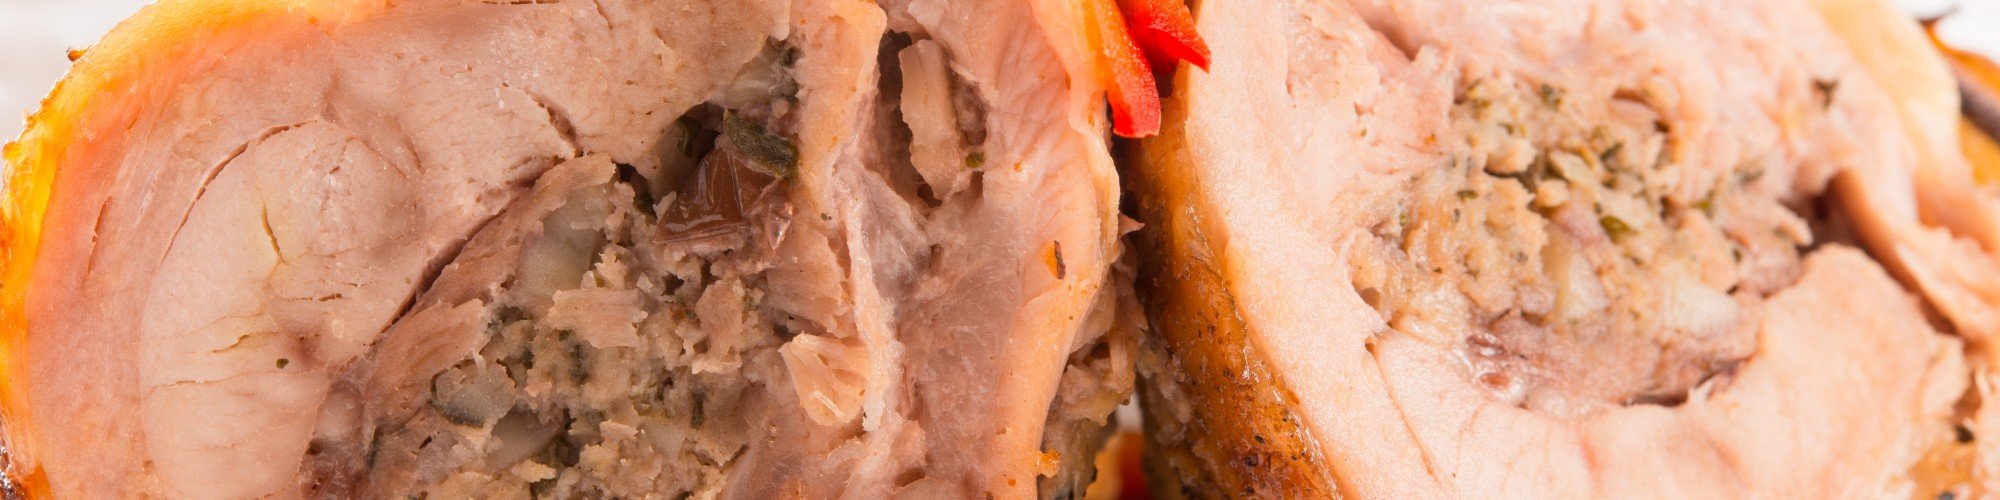 Choizo Sausage Stuffing Turkey Recipe from Liquid Assets